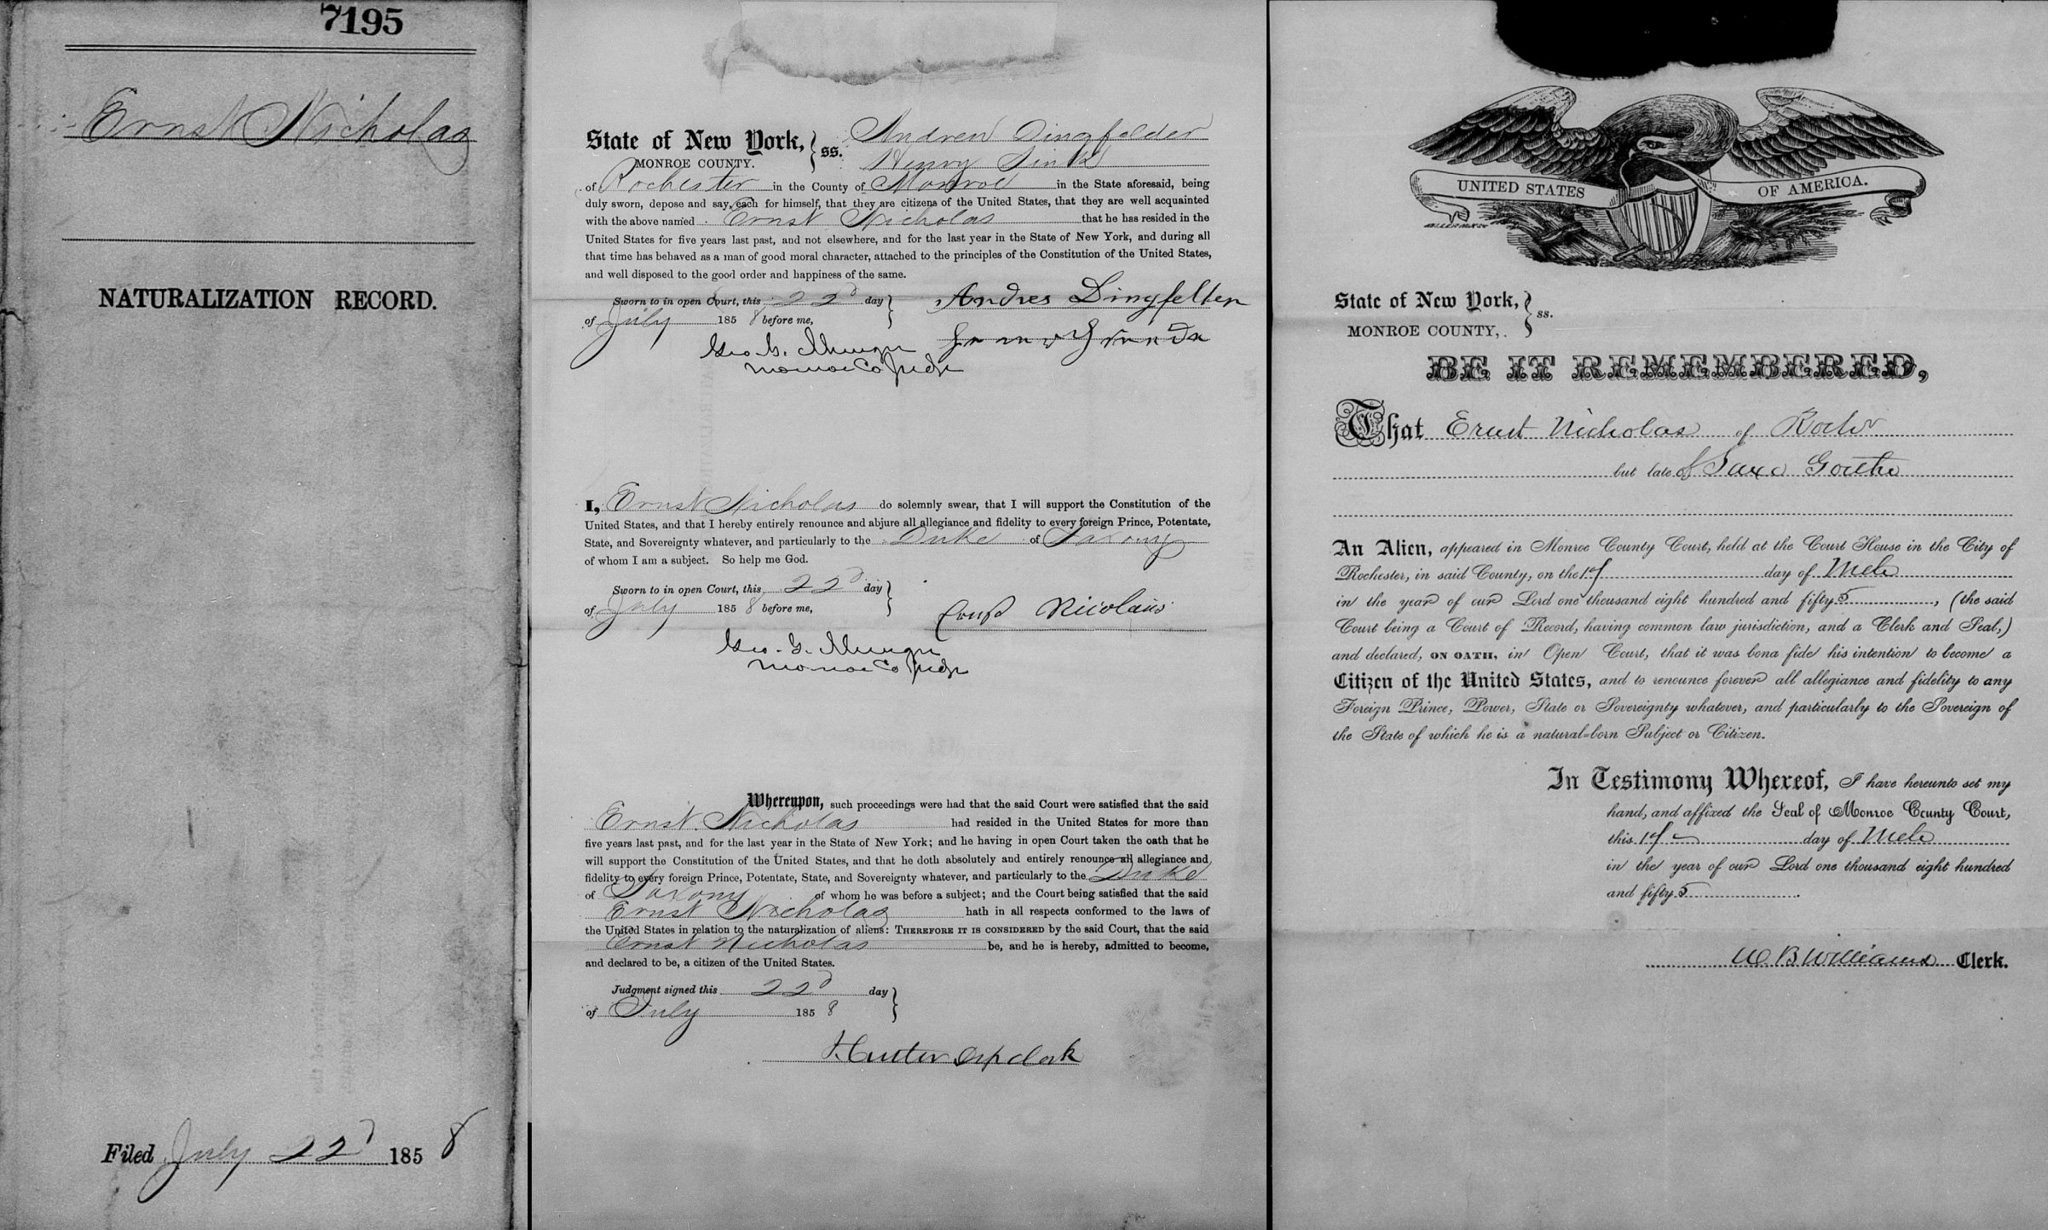 22 July 1858 Ernst Nicholas Naturalization Record